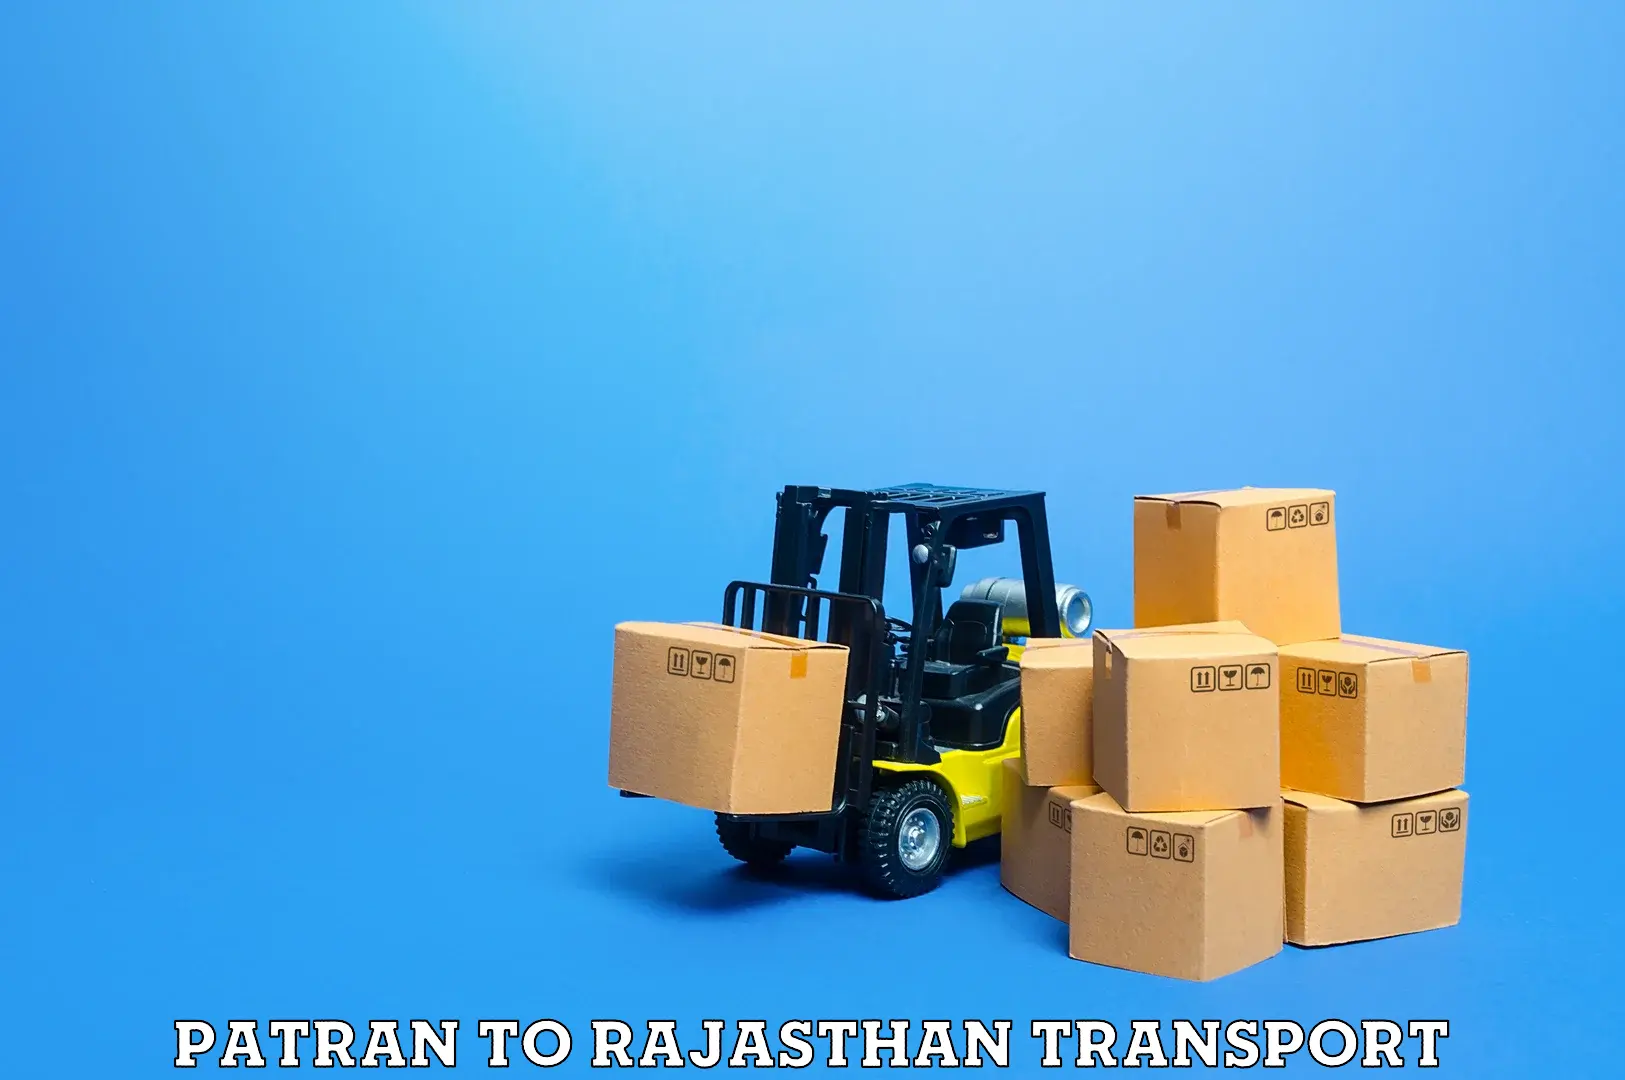 Truck transport companies in India Patran to Jodhpur